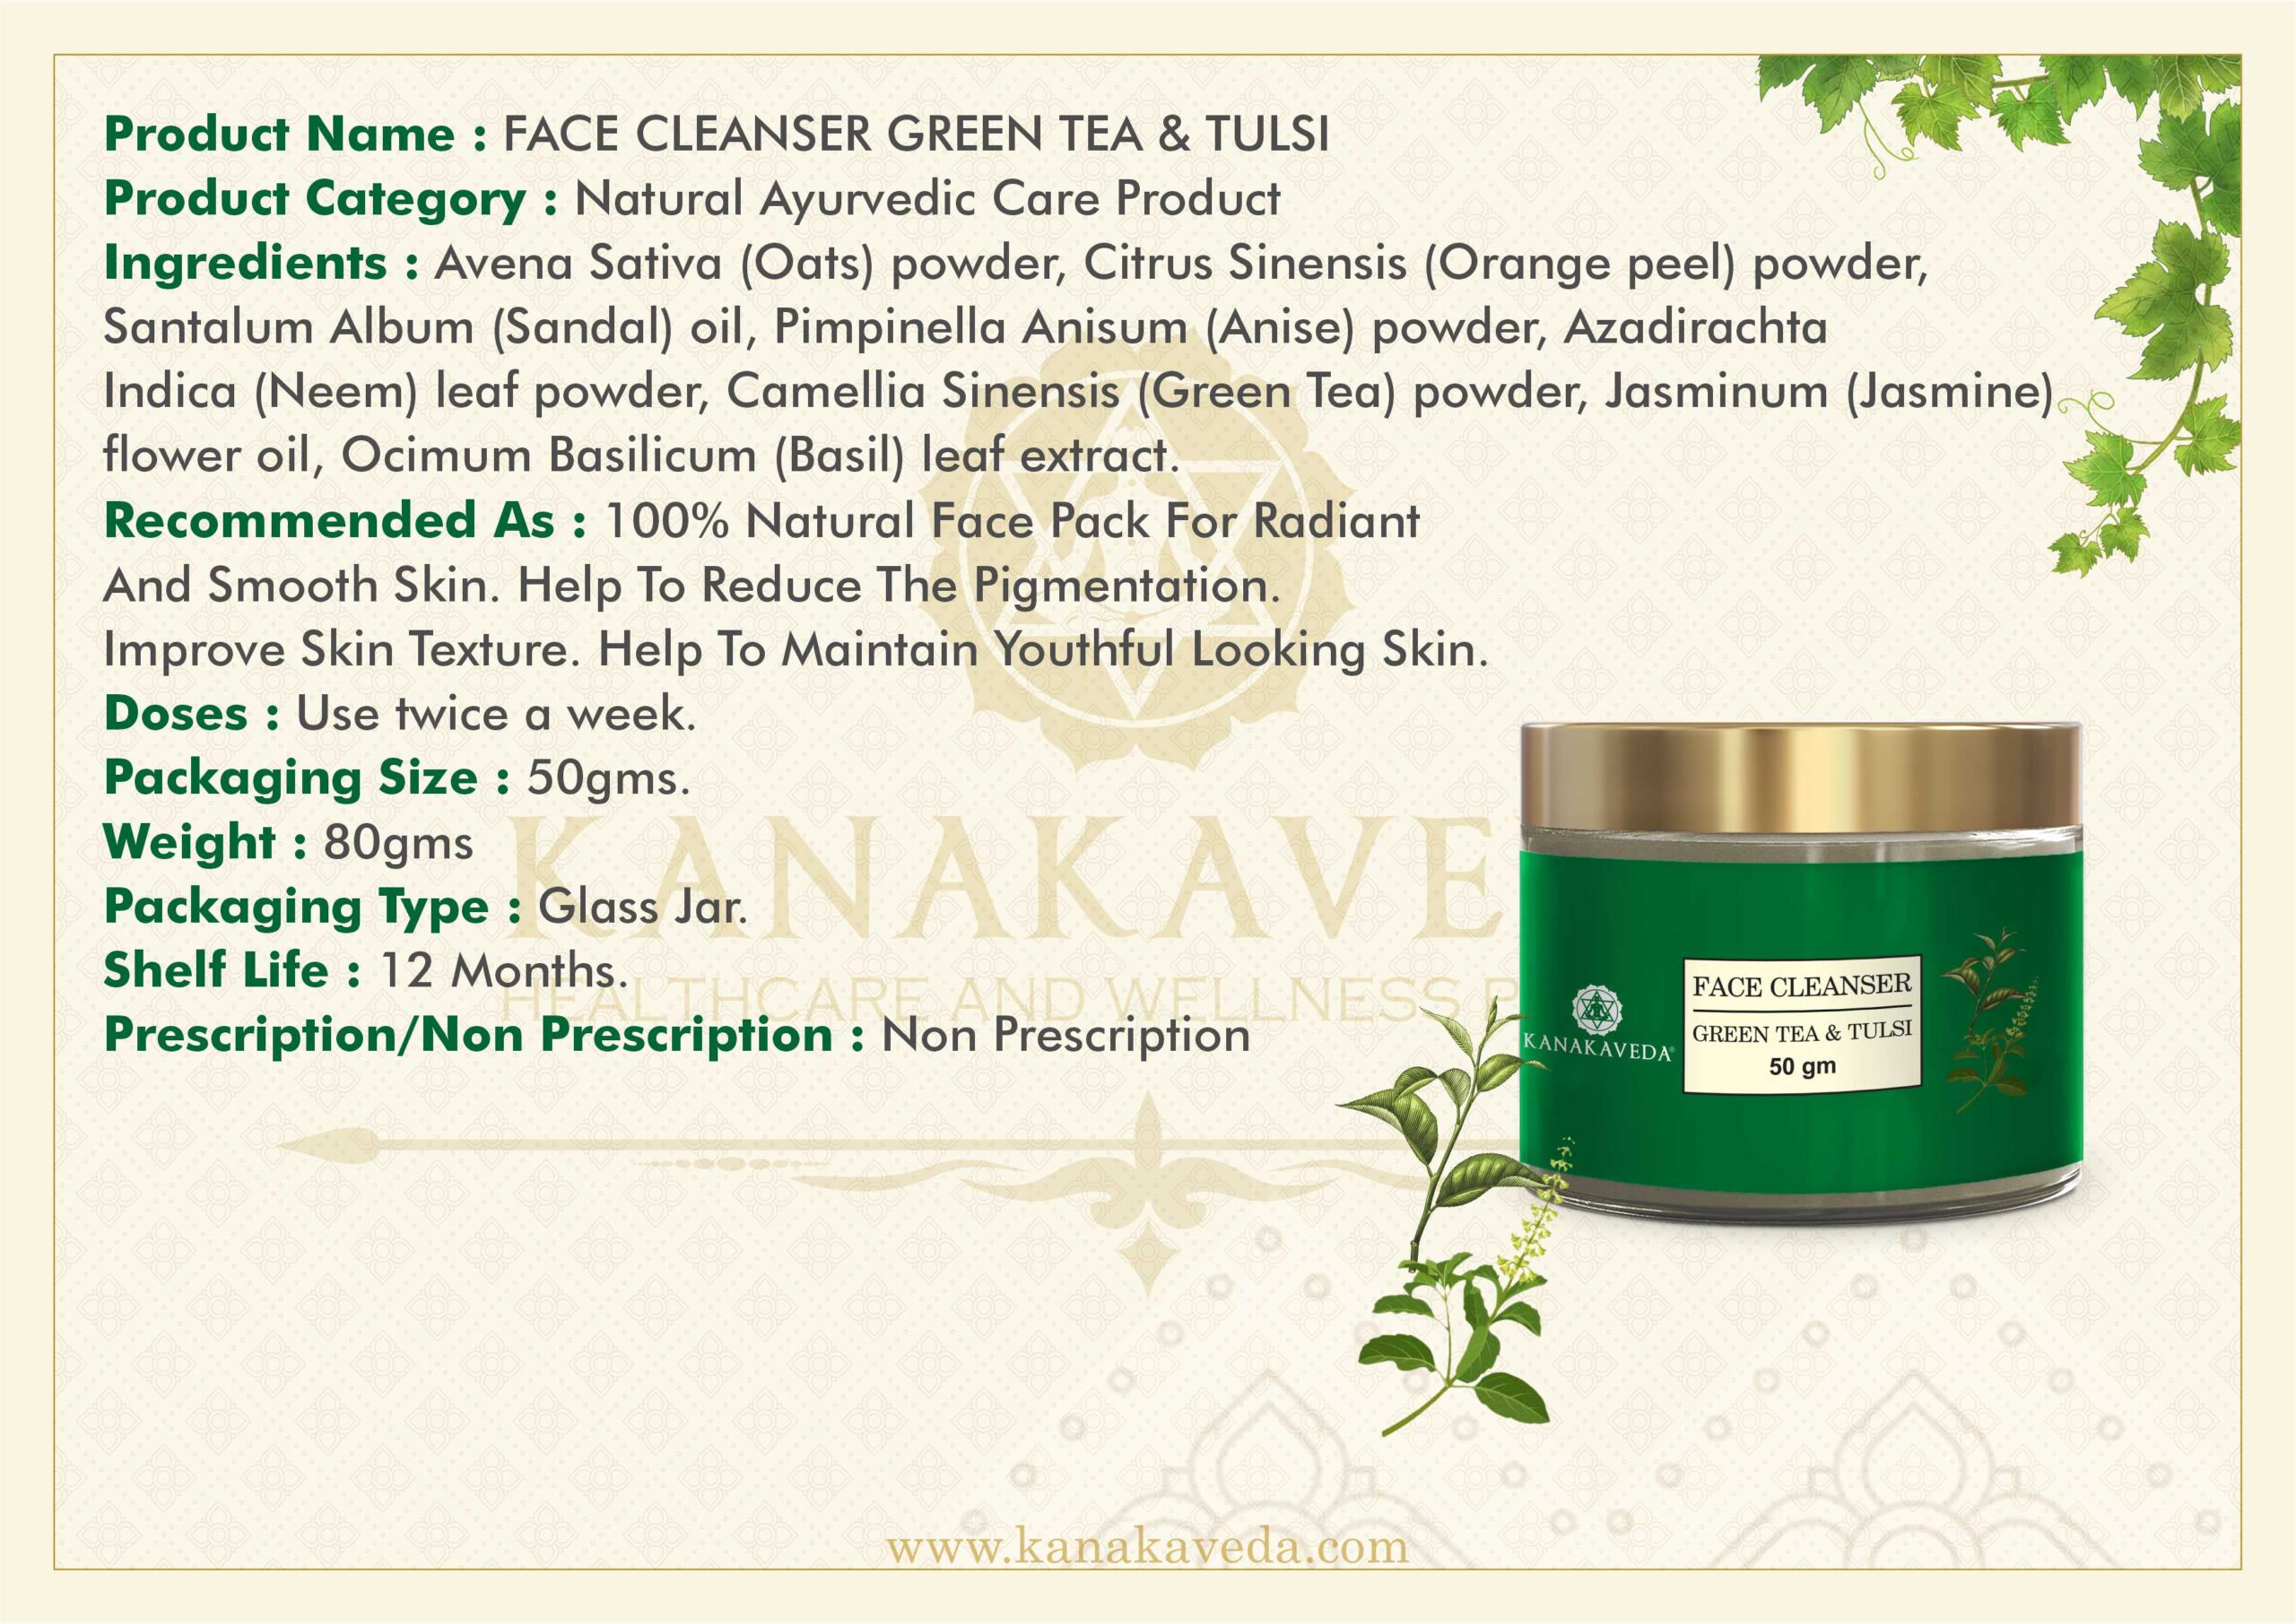 FACE CLEANSER GREEN TEA & TULSI